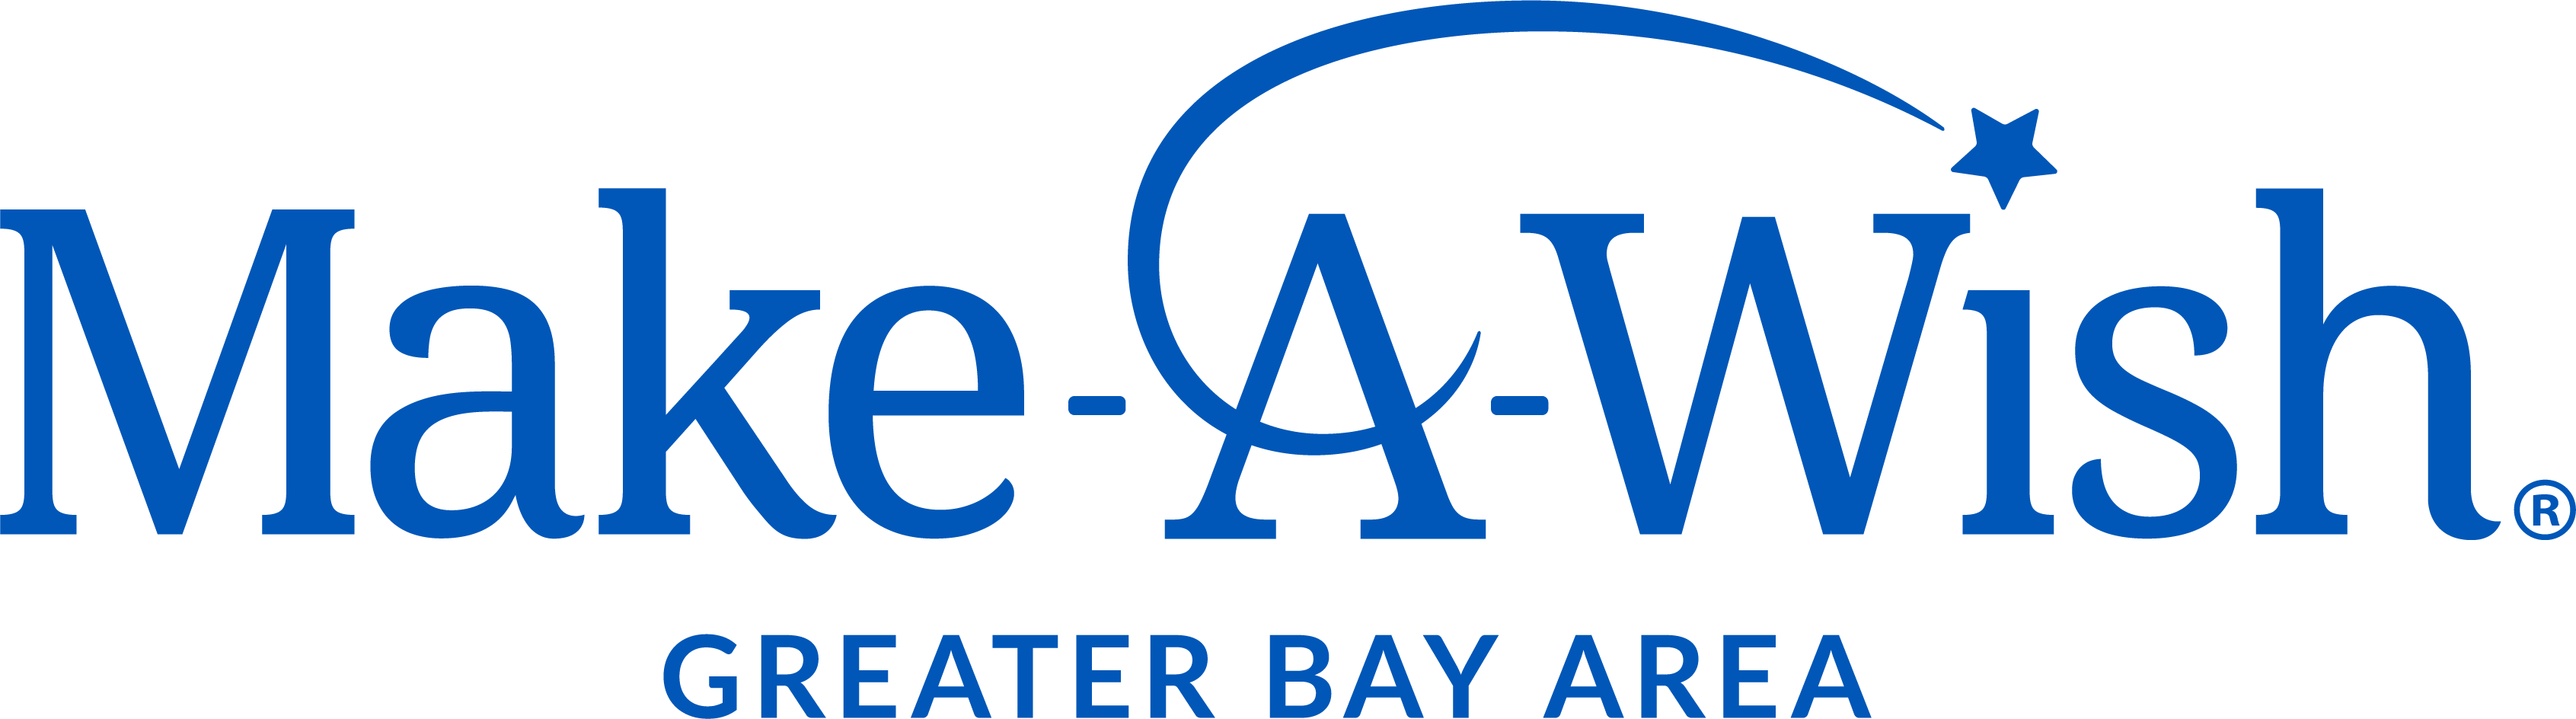 Make-A-Wish Greater Bay Area logo 